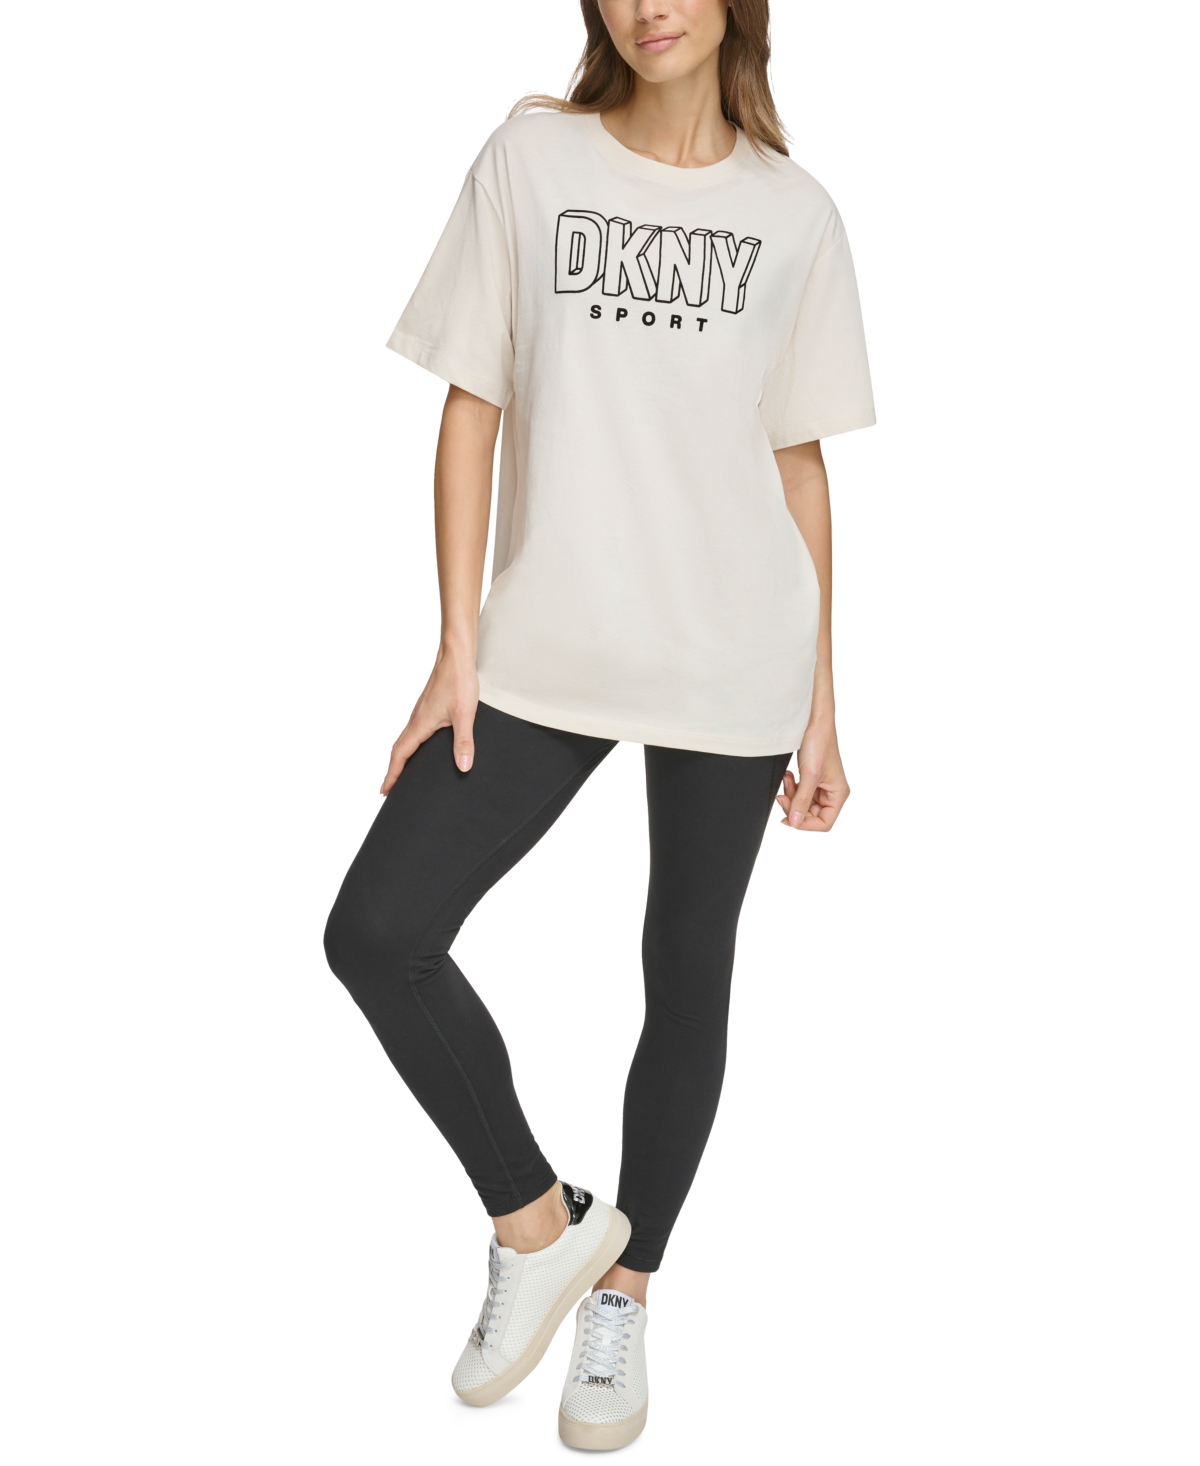 Dkny Sport Women's Cotton Flocked-Logo Crewneck Drop Shoulder Tee - Sand